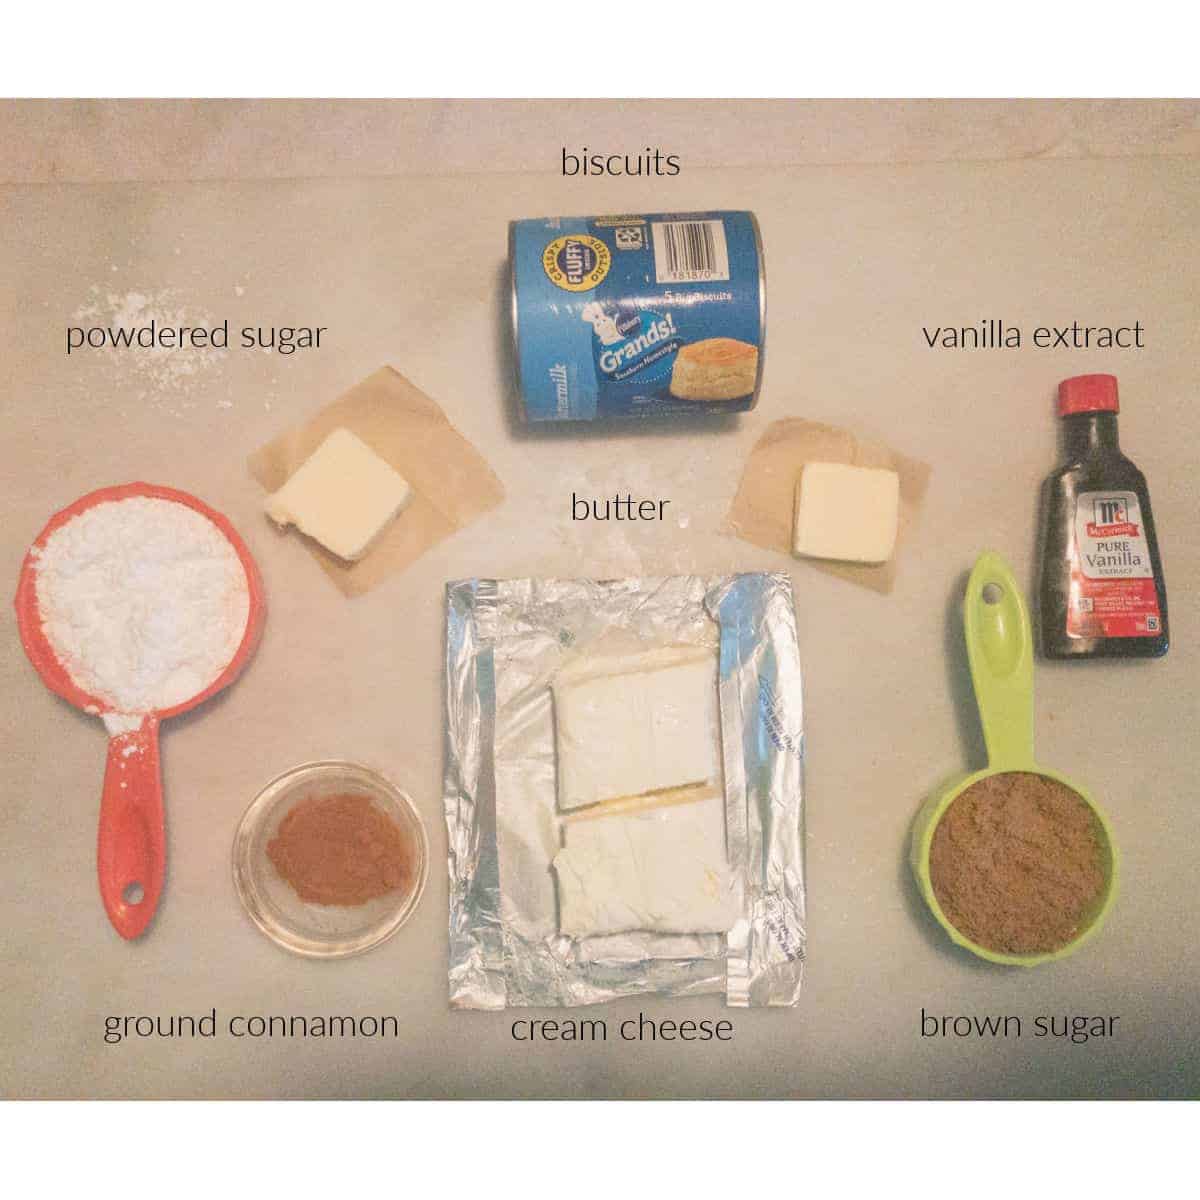 ingredients for cinnamon rolls measuresout onpastry board.